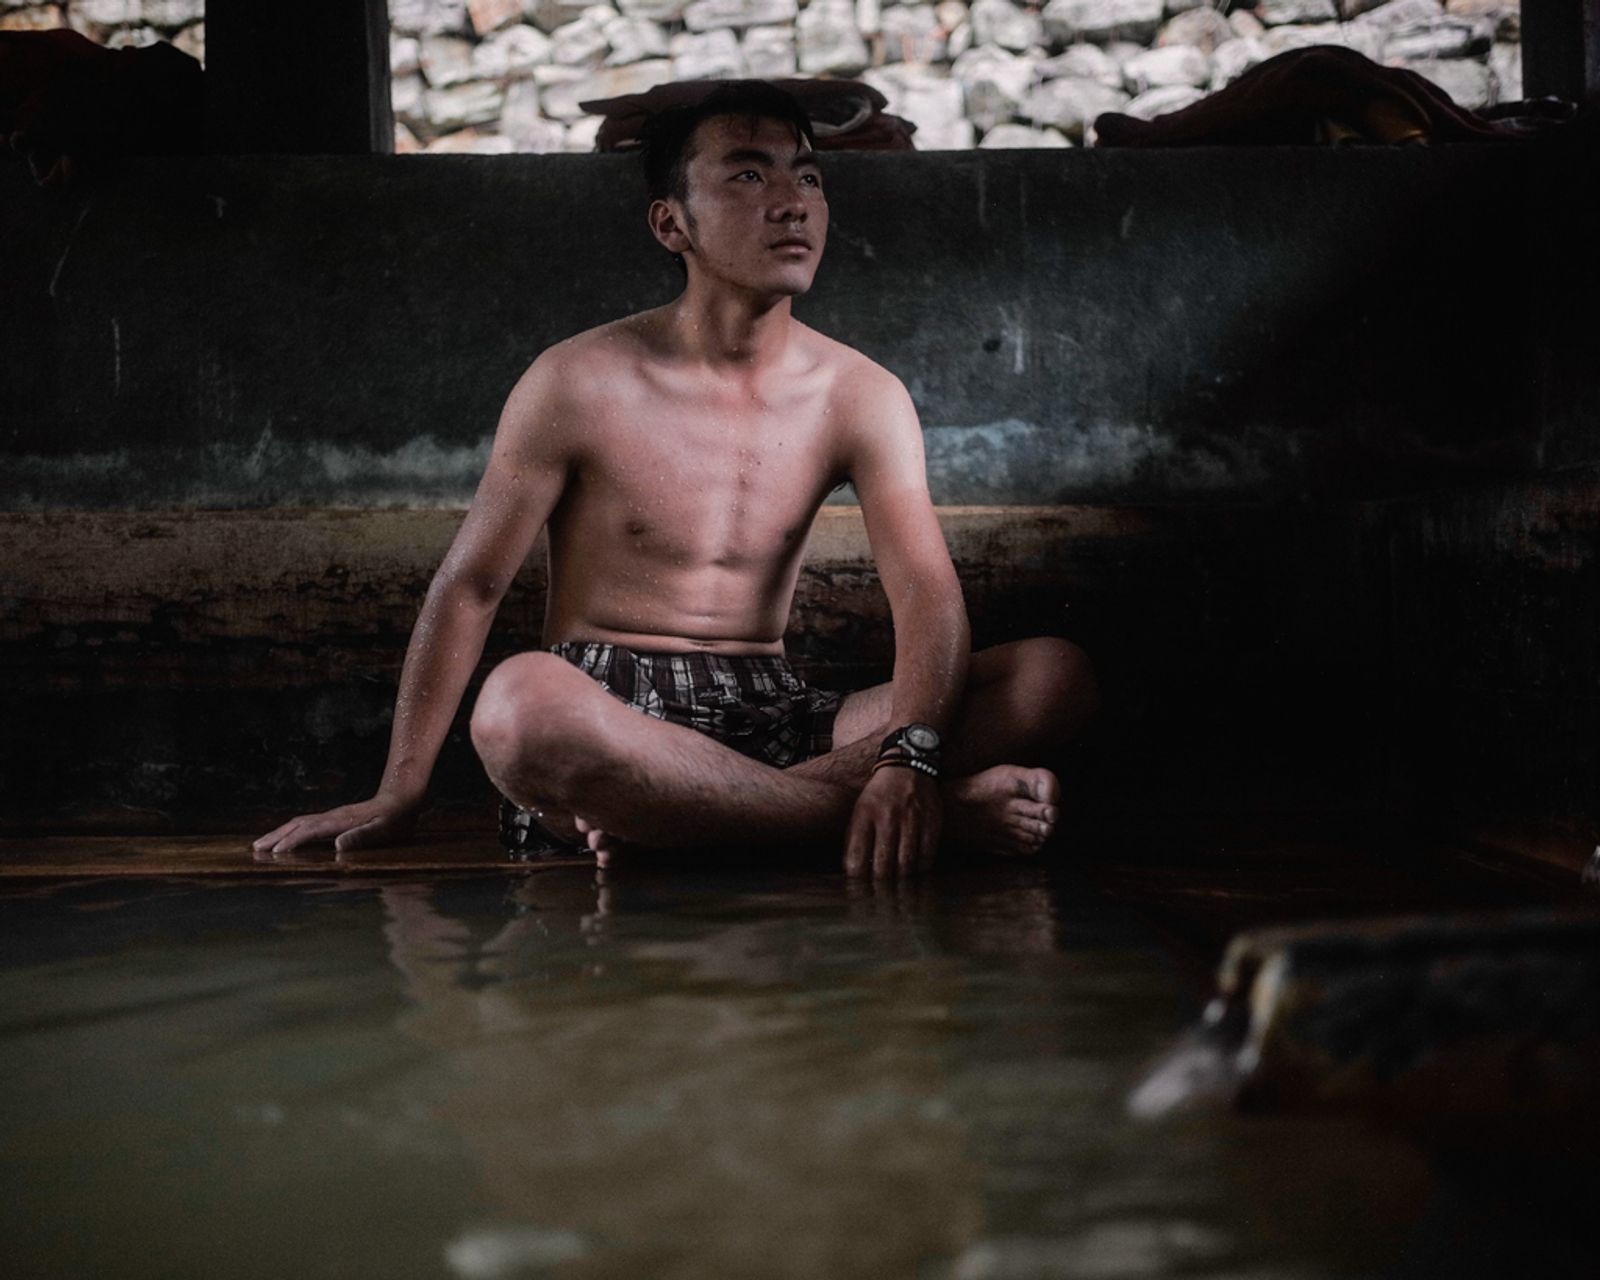 © Ciril Jazbec, from the series Bhutan